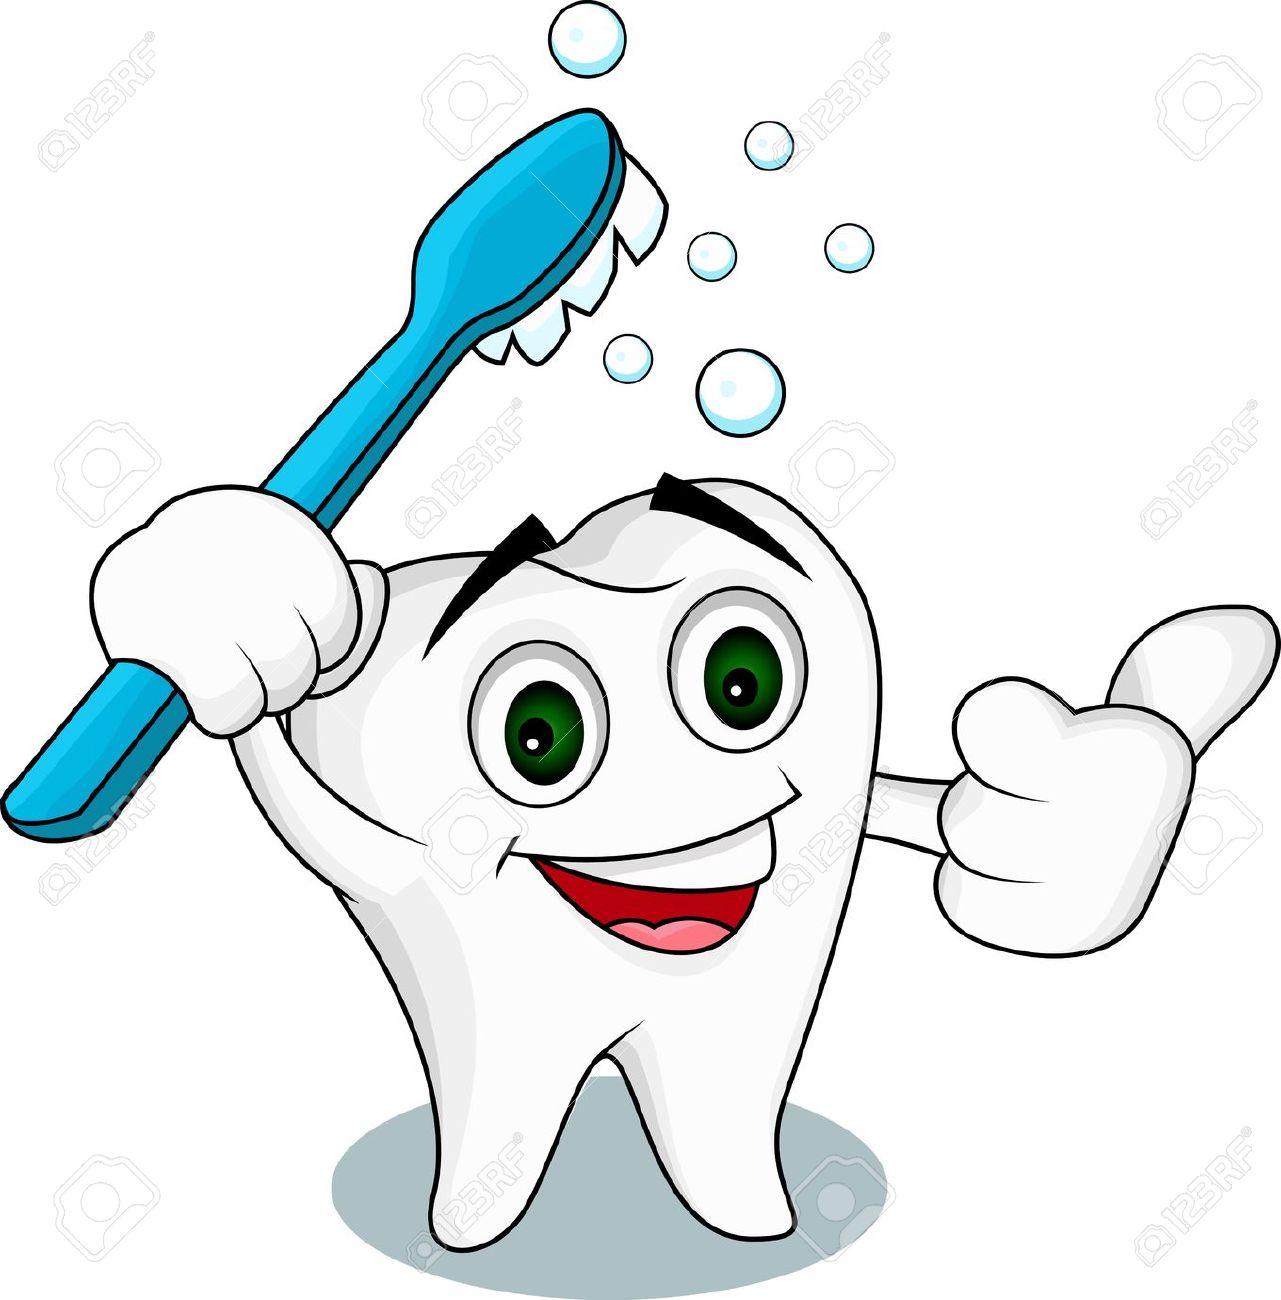 Tooth dental cartoon characters stock illustrations vectors clipart